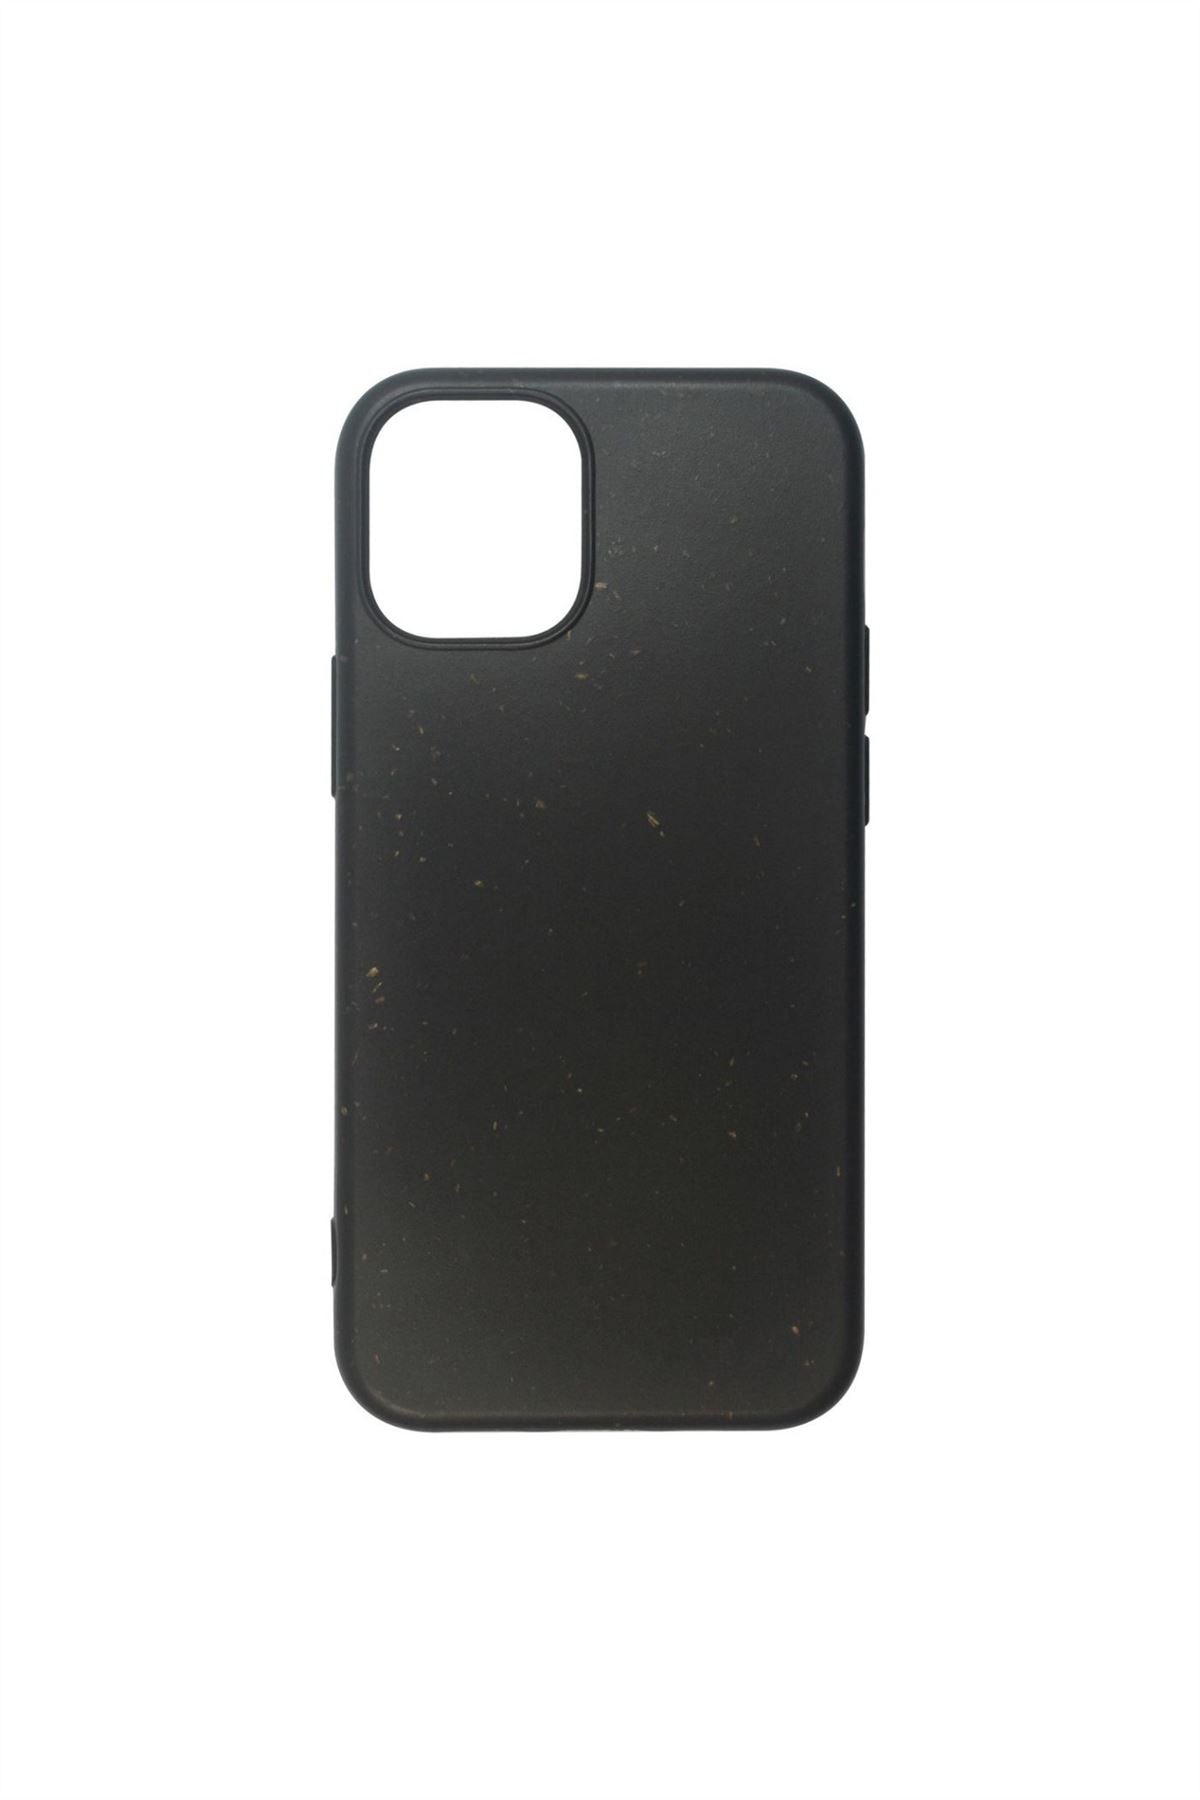 eSTUFF ES671162 mobile phone case 13.7 cm (5.4&quot;) Cover Black